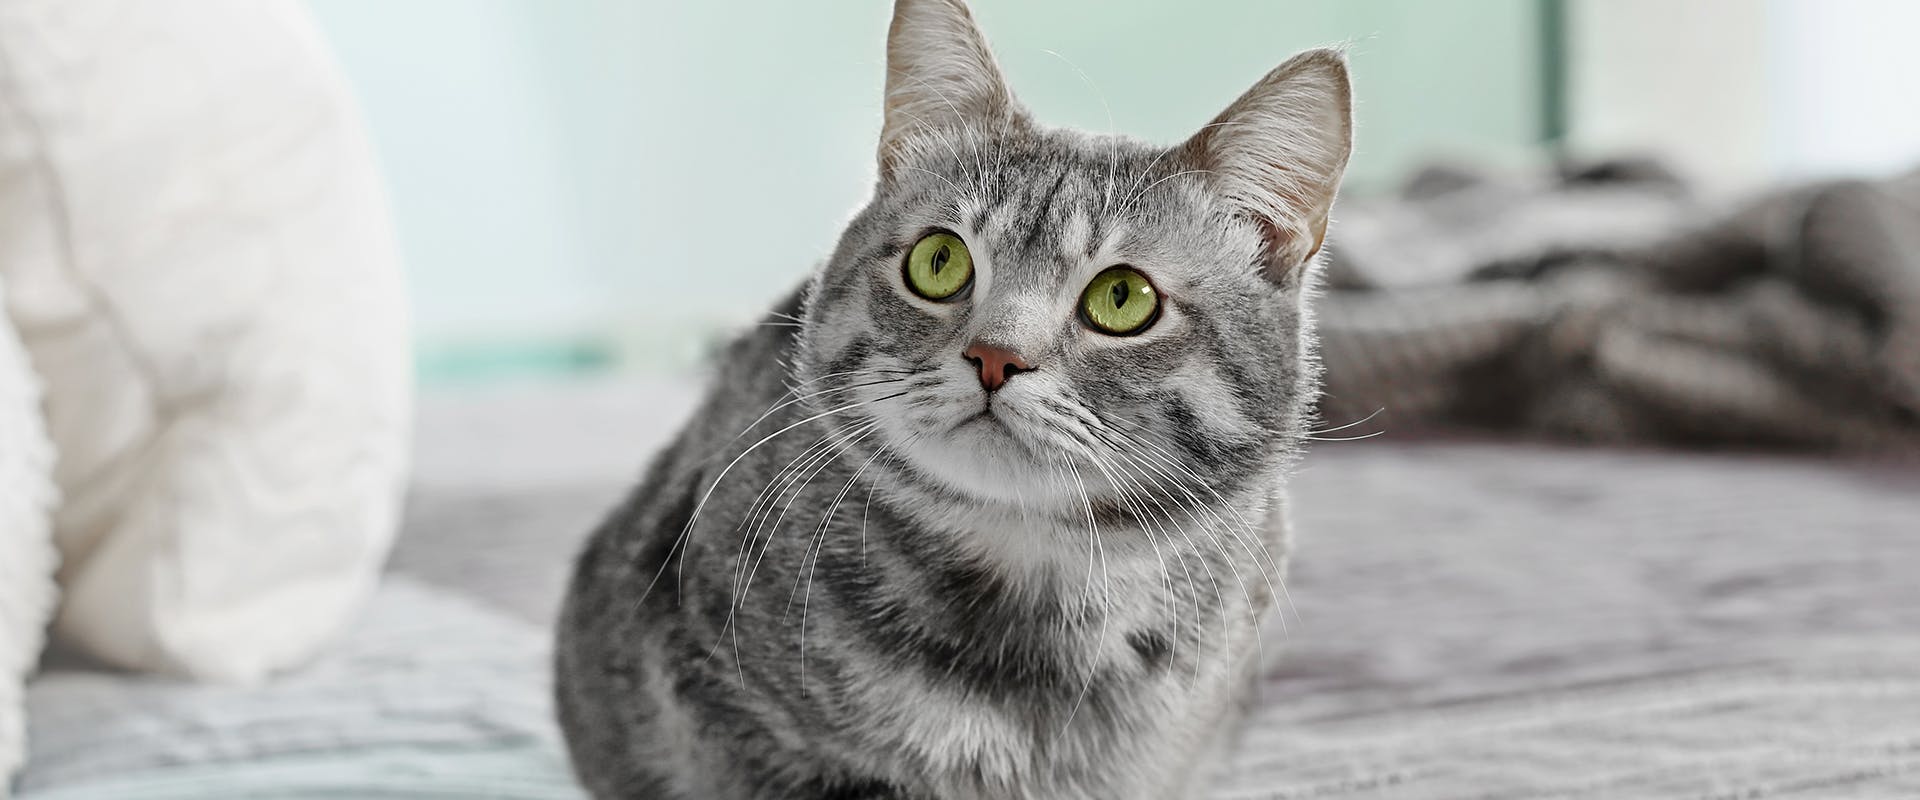 A grey tabby cat